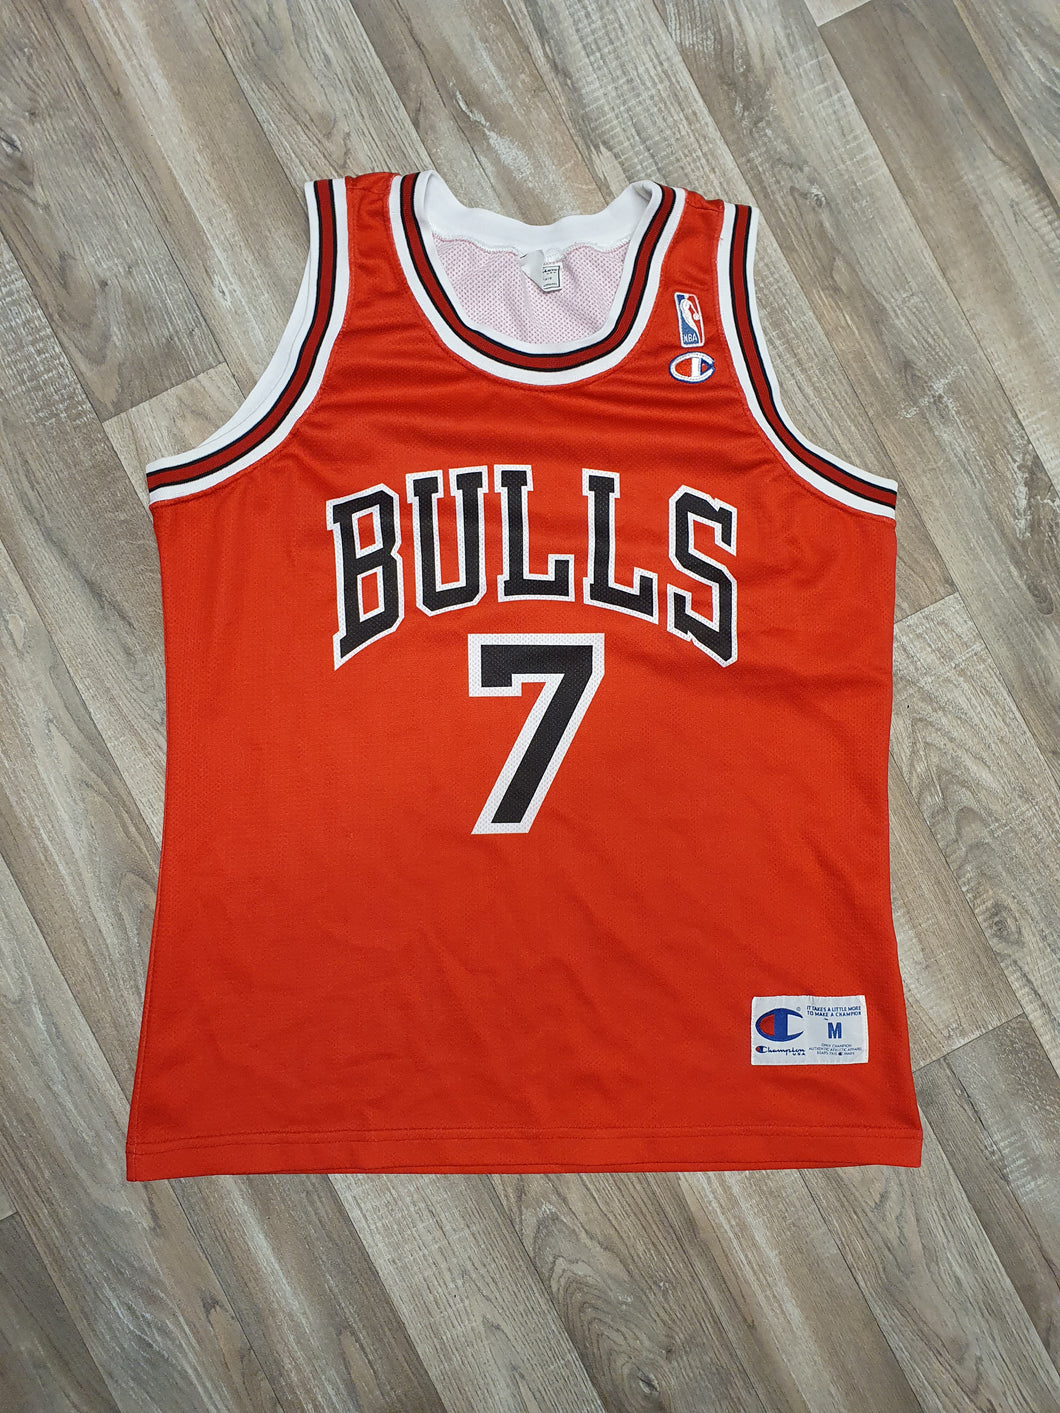 Toni Kukoc Chicago Bulls Jersey Size Medium